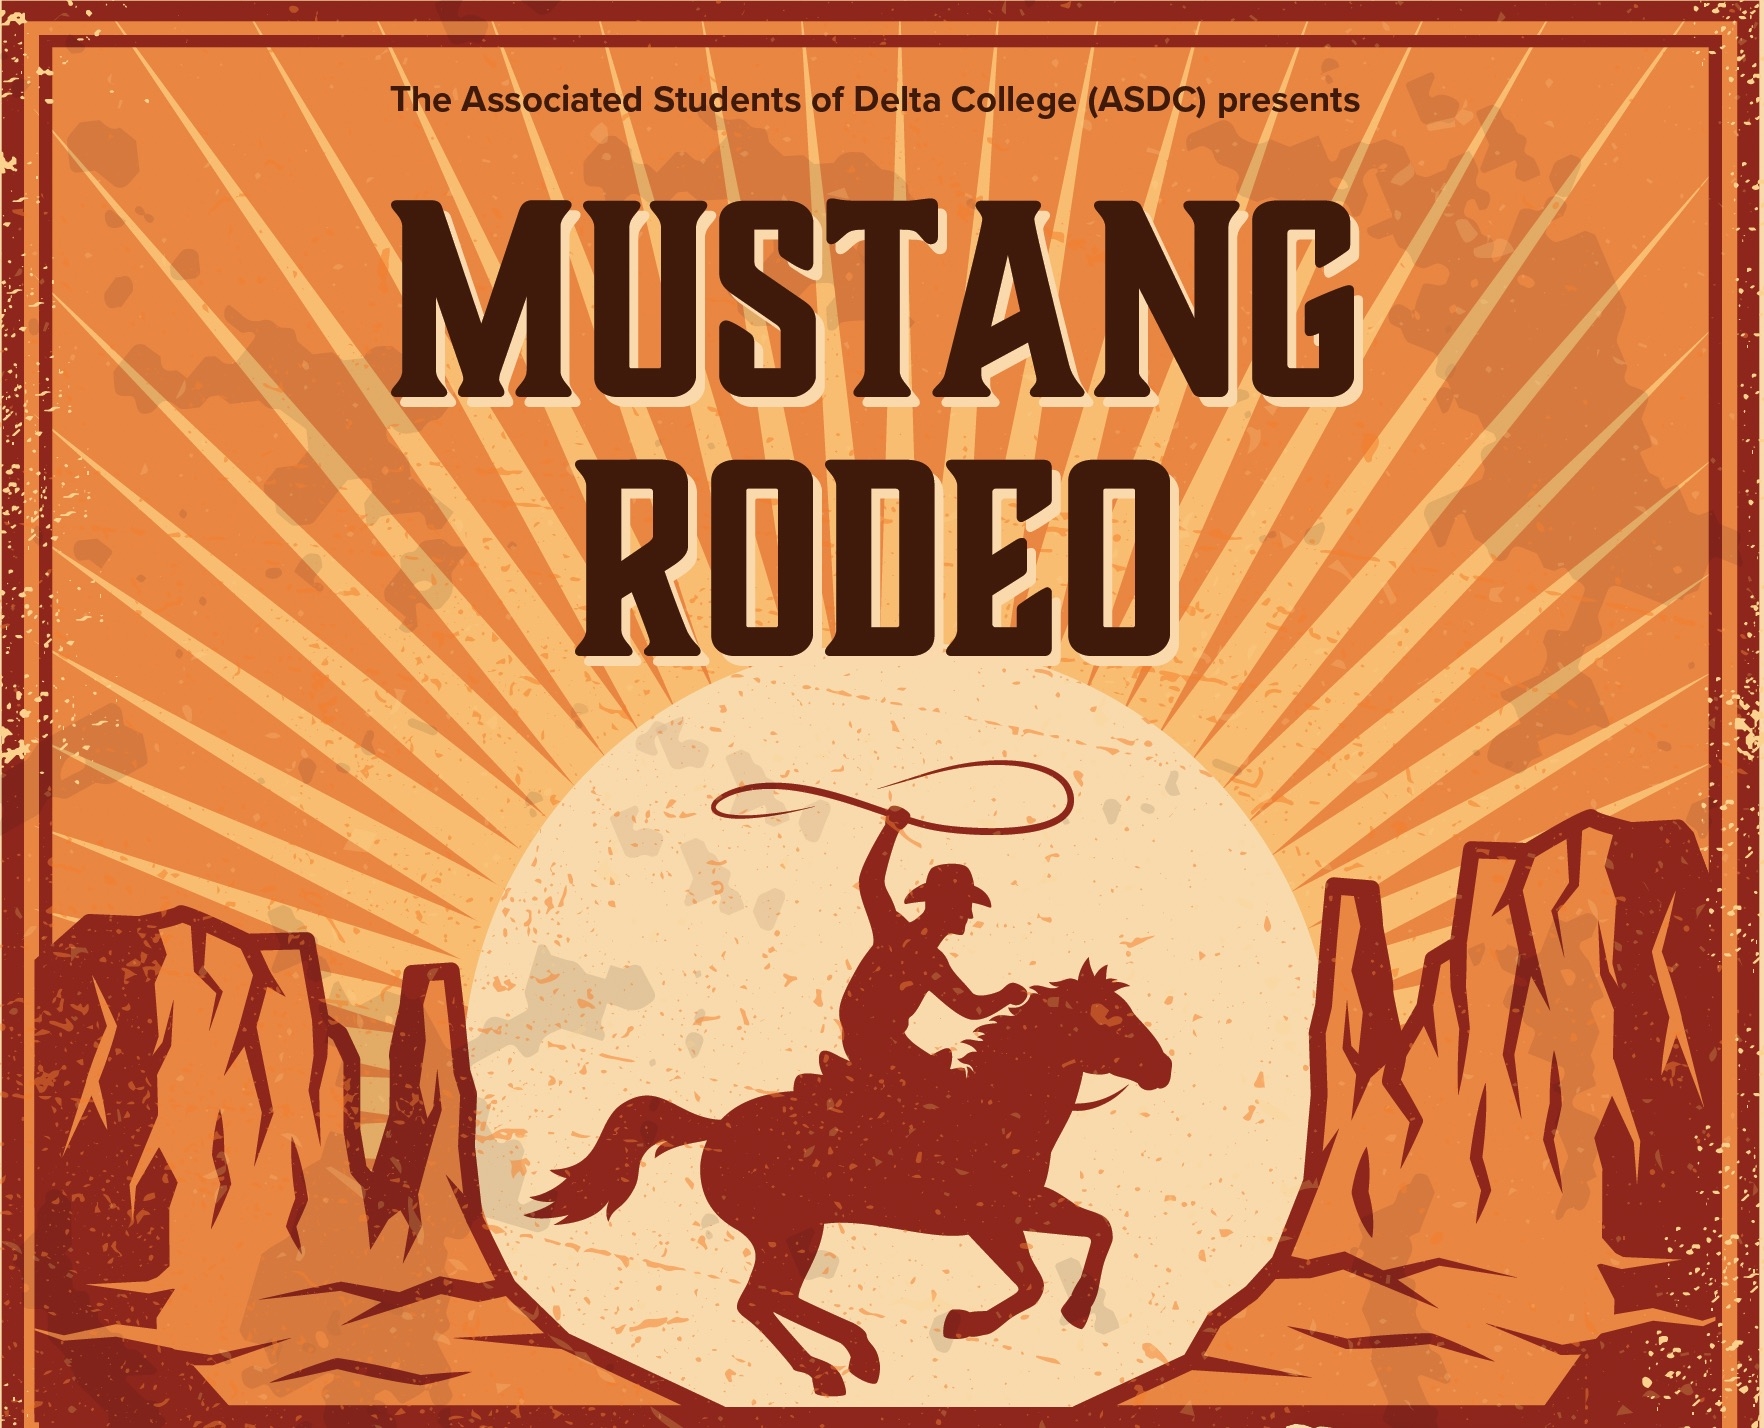 Mustang Rodeo